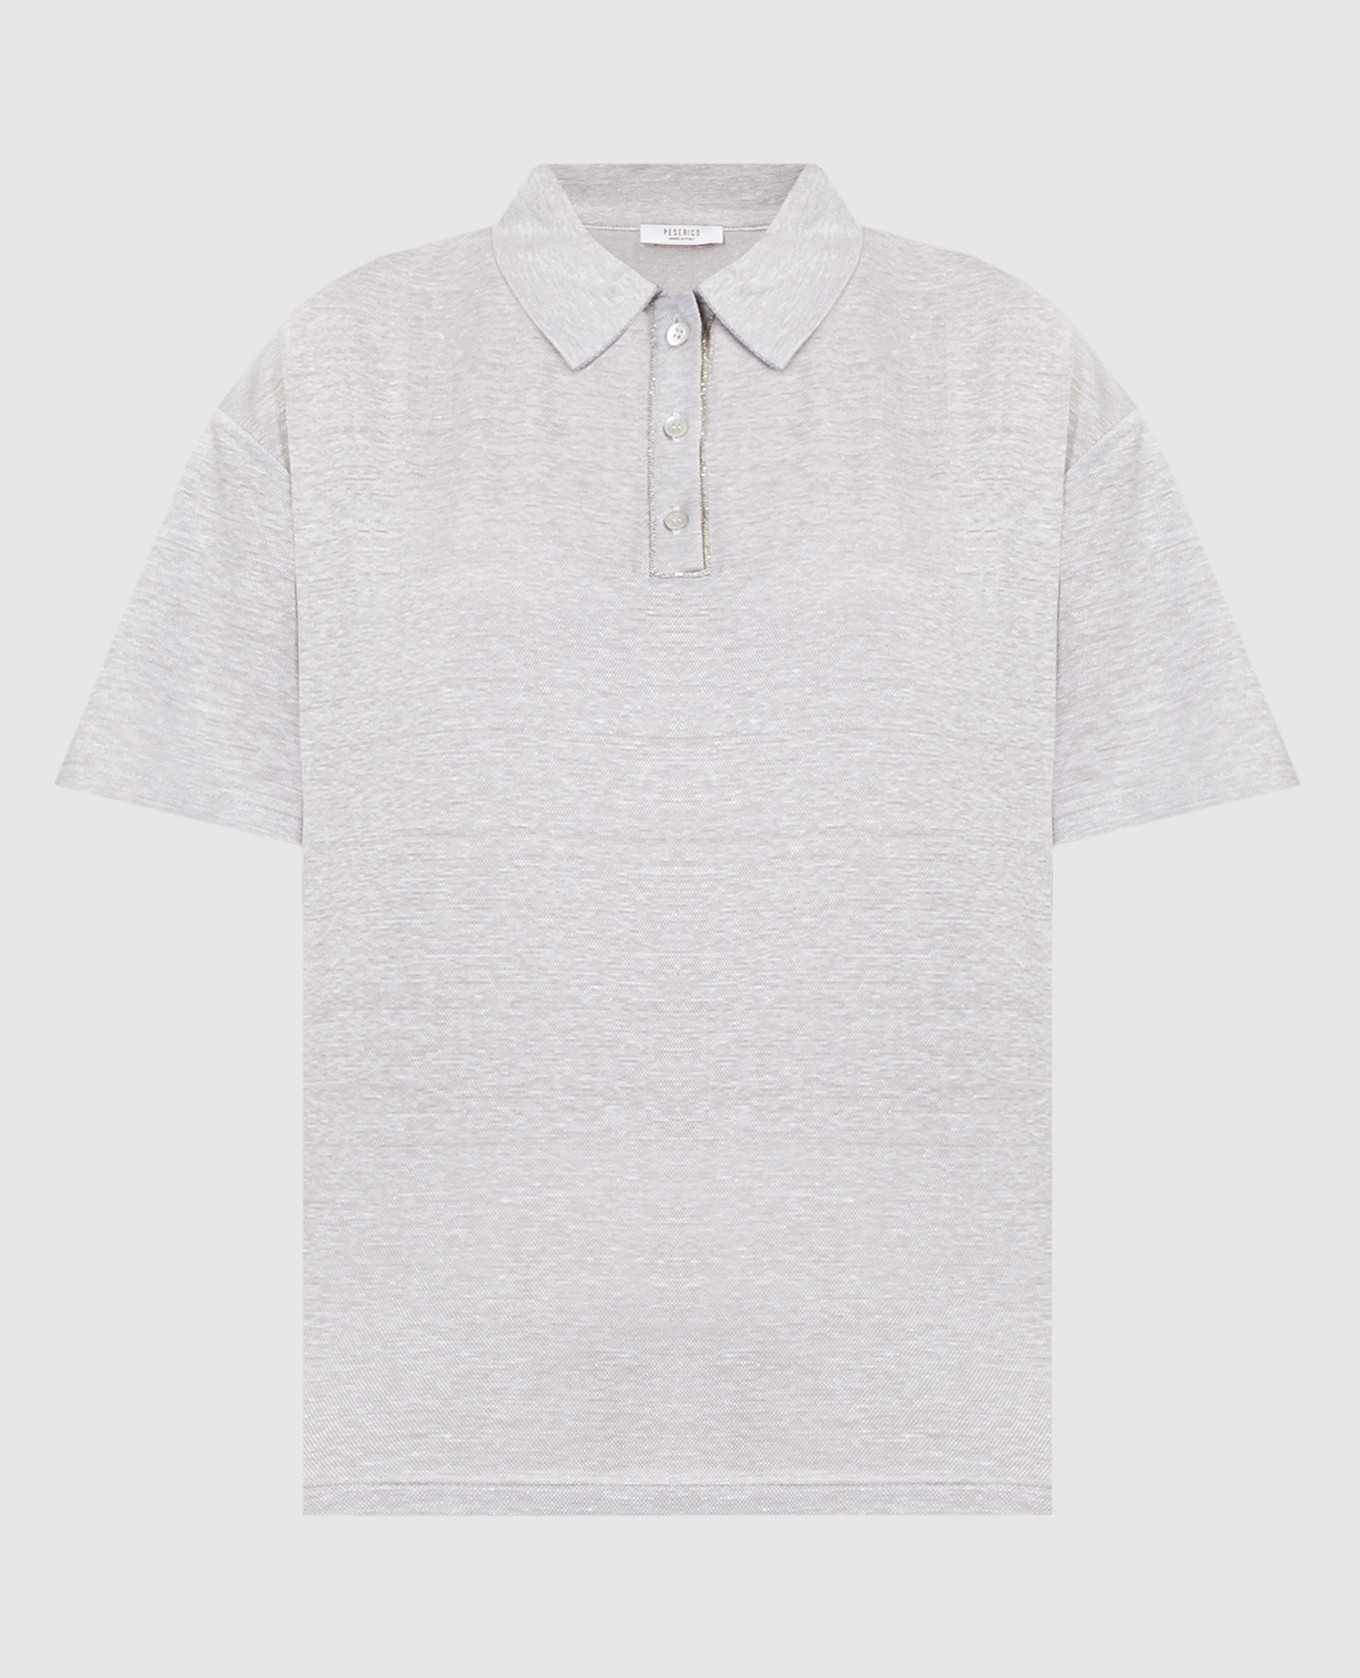 Gray linen polo shirt with monil chain